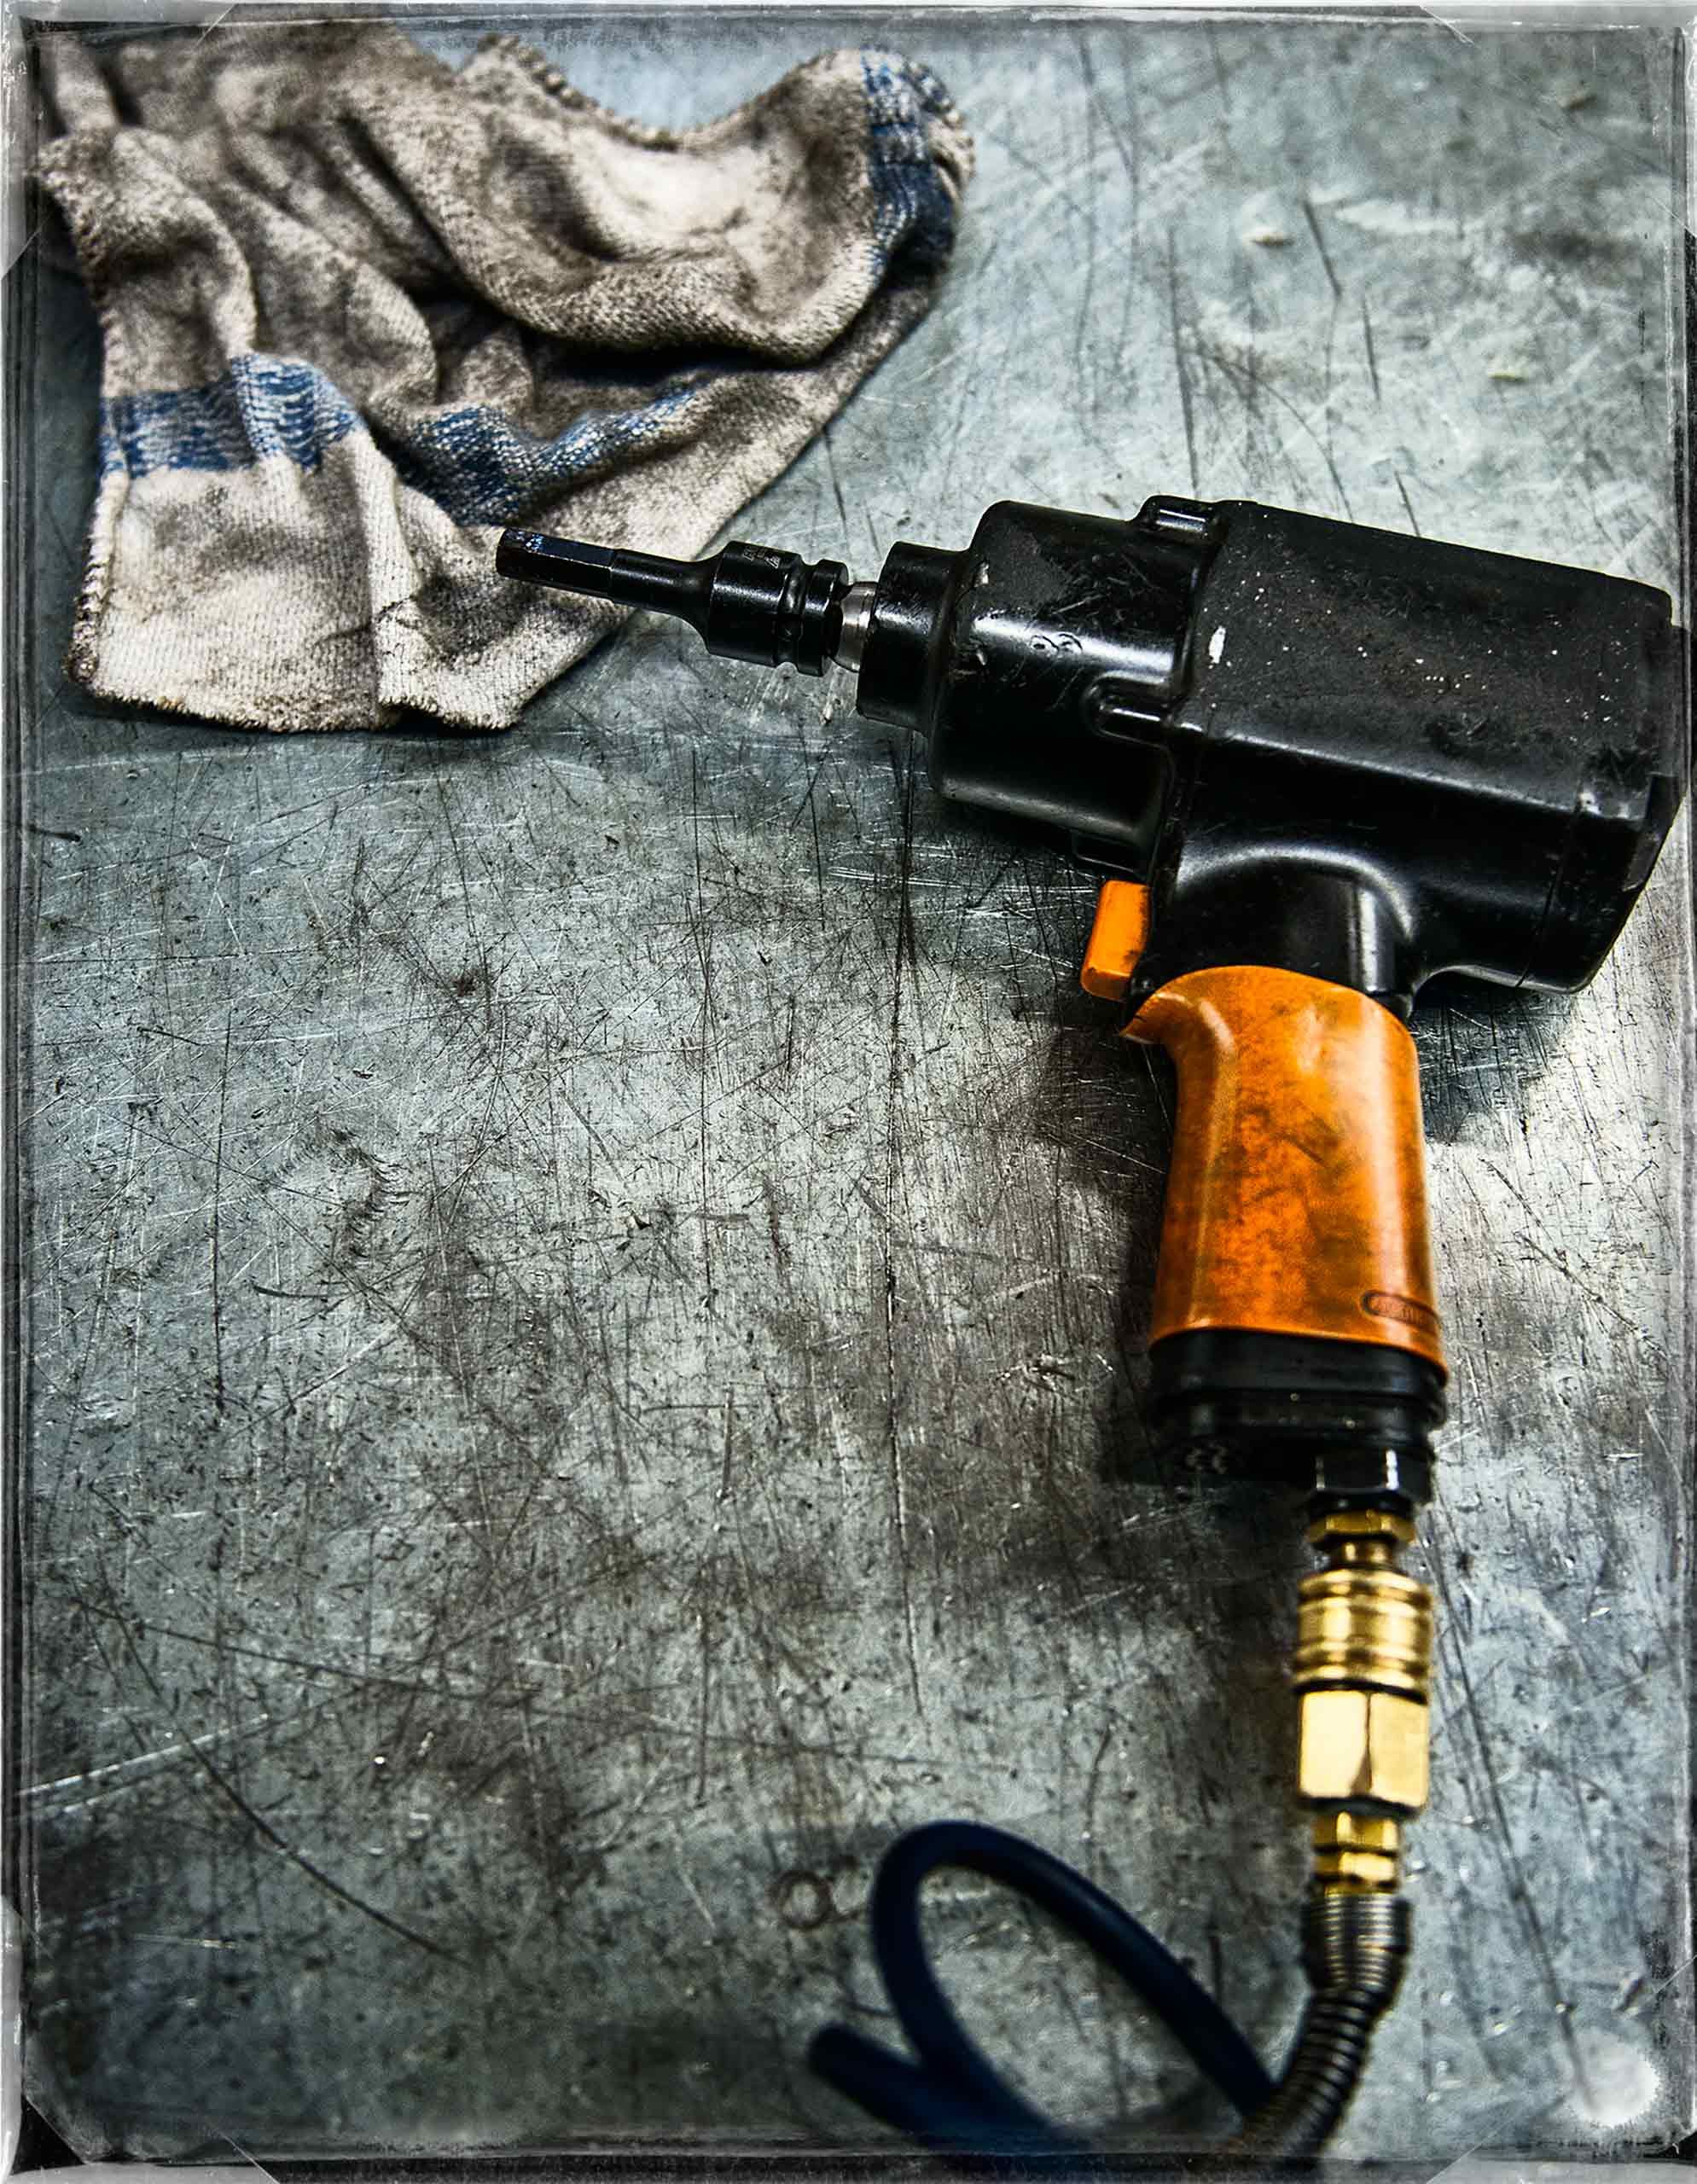 tools-wustof-factory-solingen-germany-by-HenrikOlundPhotography.jpg